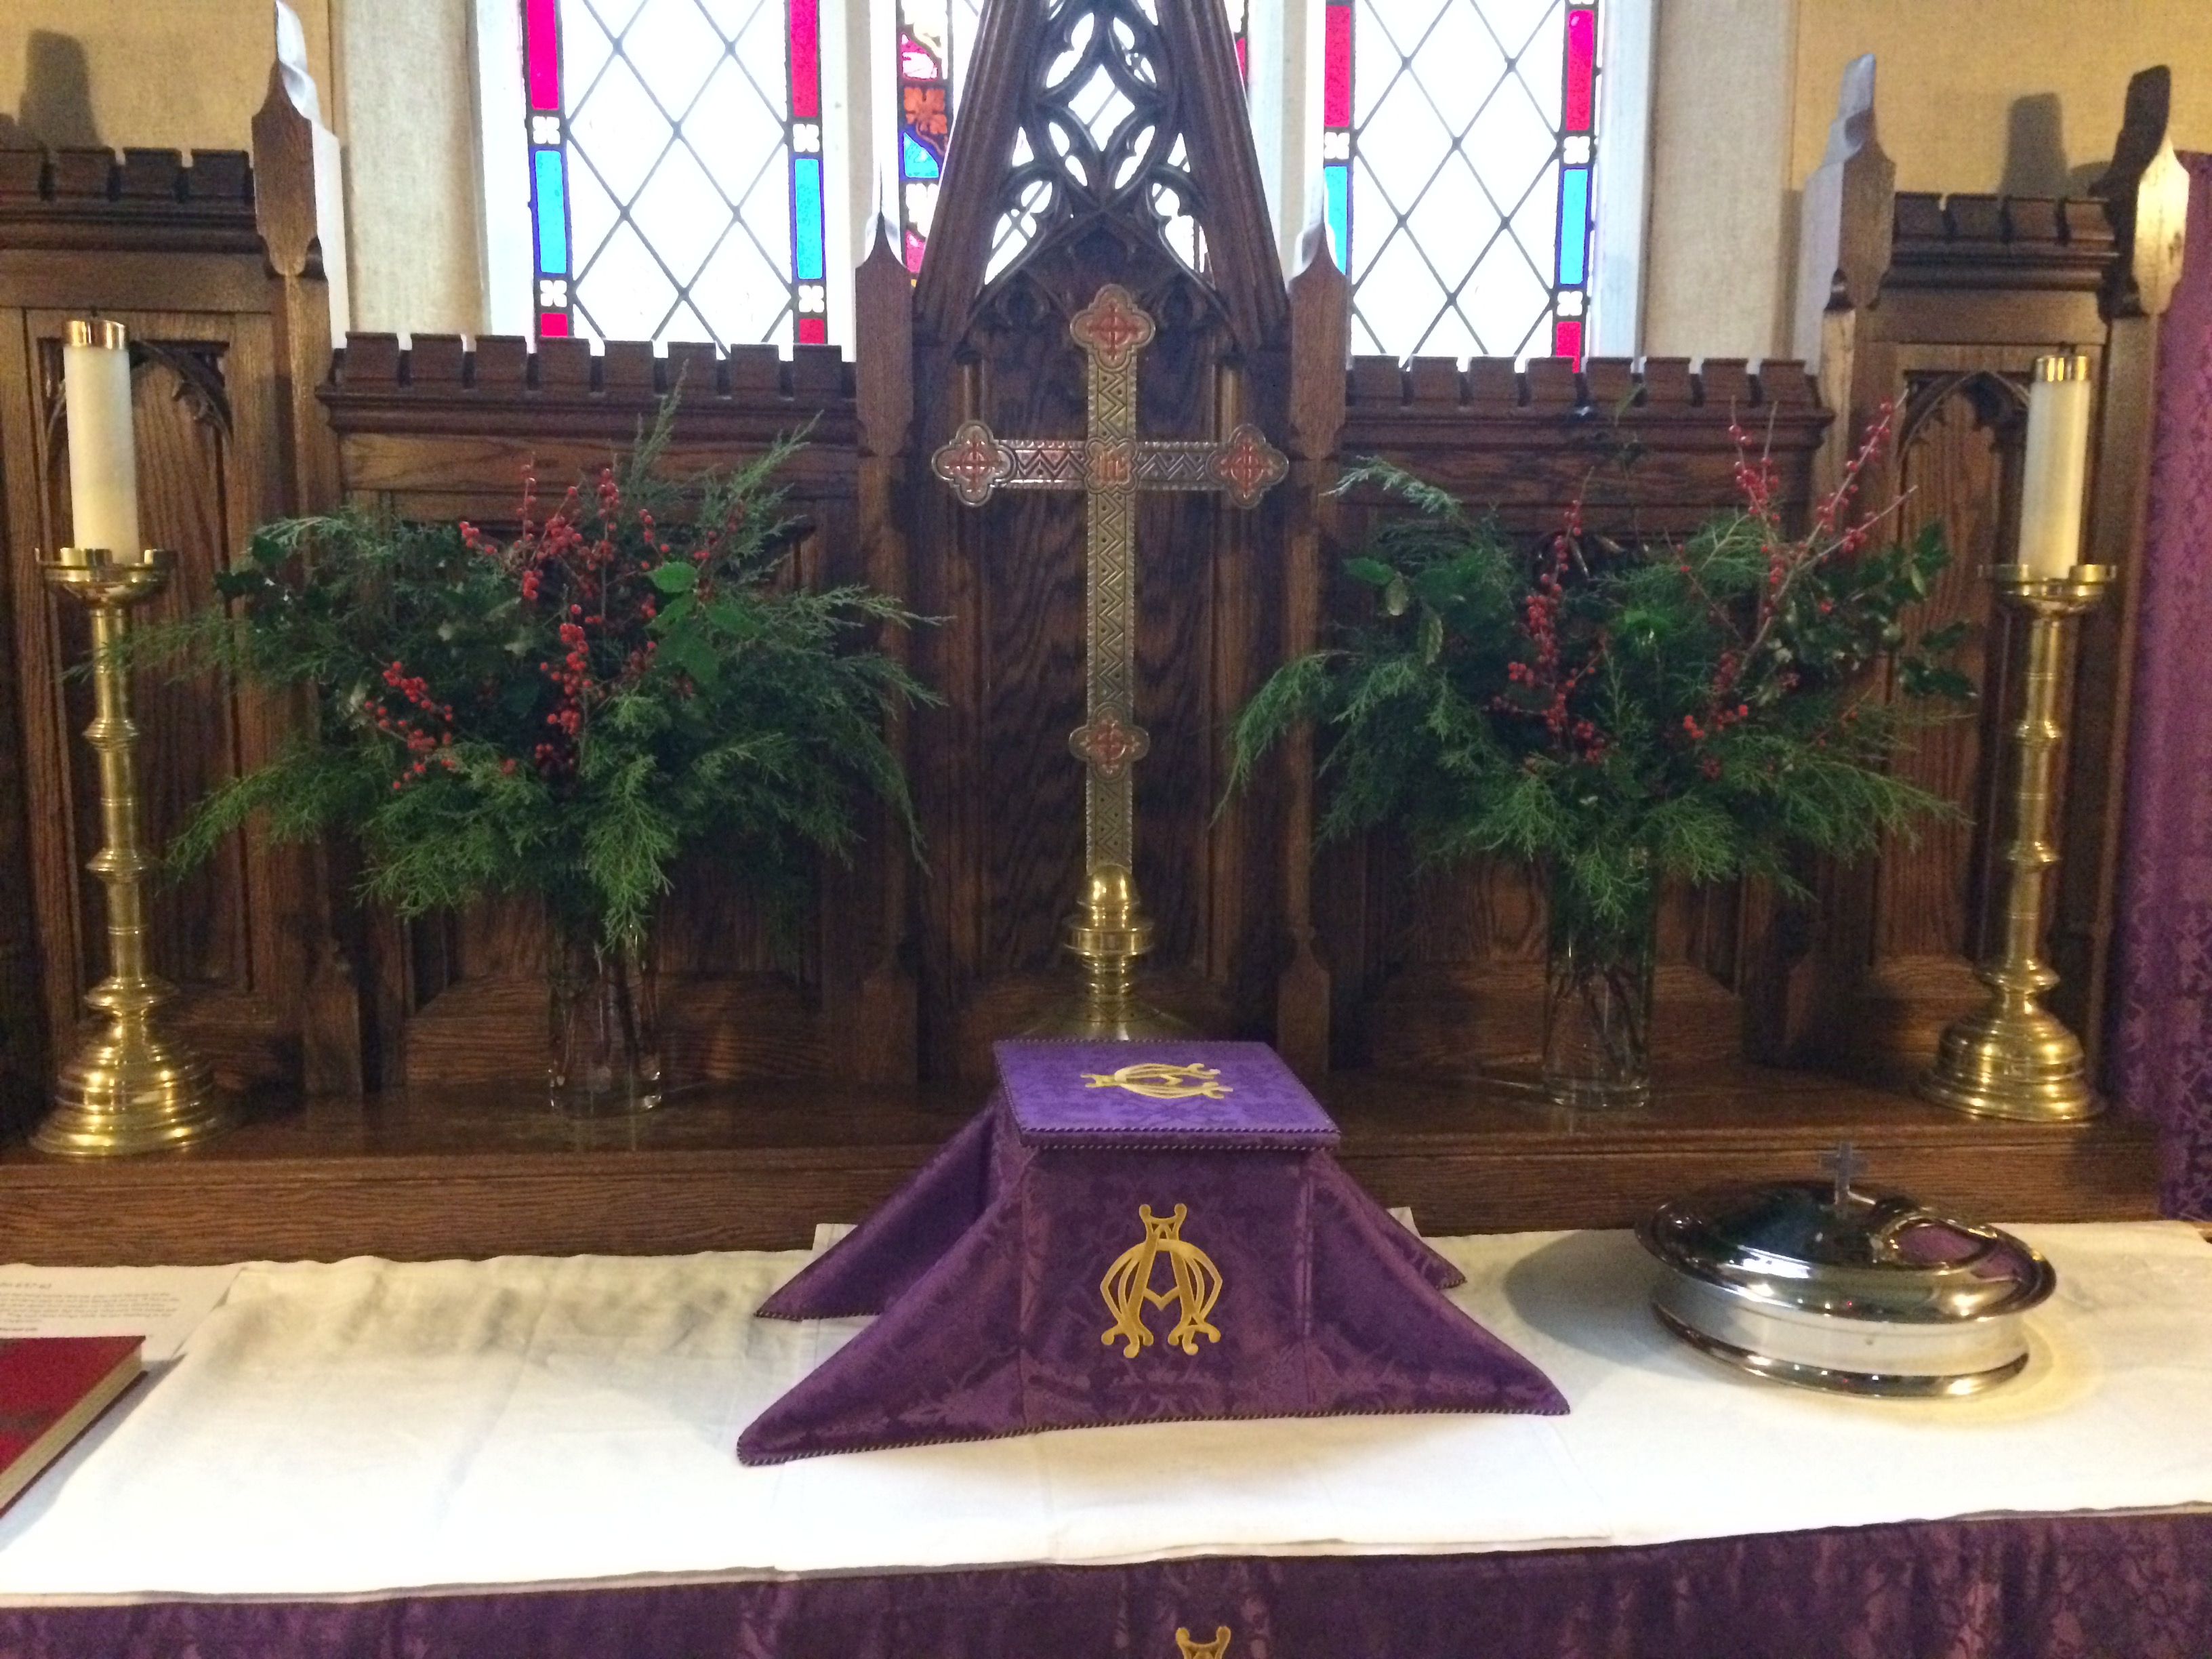 Sunday, December 4th at St. Luke's: Flowers on the Altar.